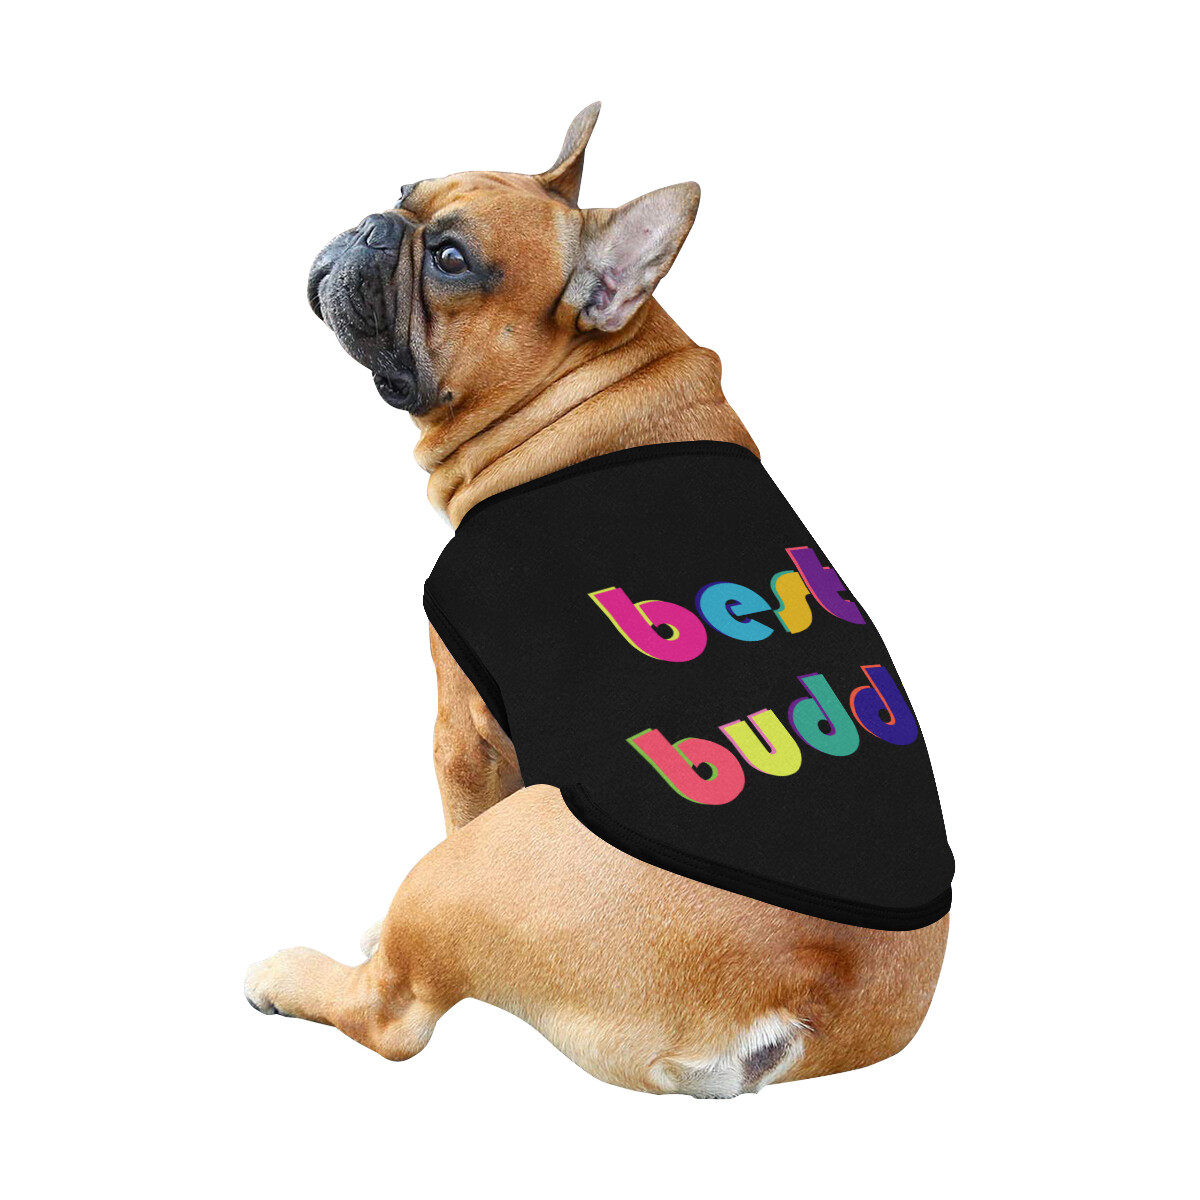 🐕 Best buddy Dog shirt, Dog Tank Top, Dog t-shirt, Dog clothes, Gifts, front back print, 7 sizes XS to 3XL, dog gifts, black